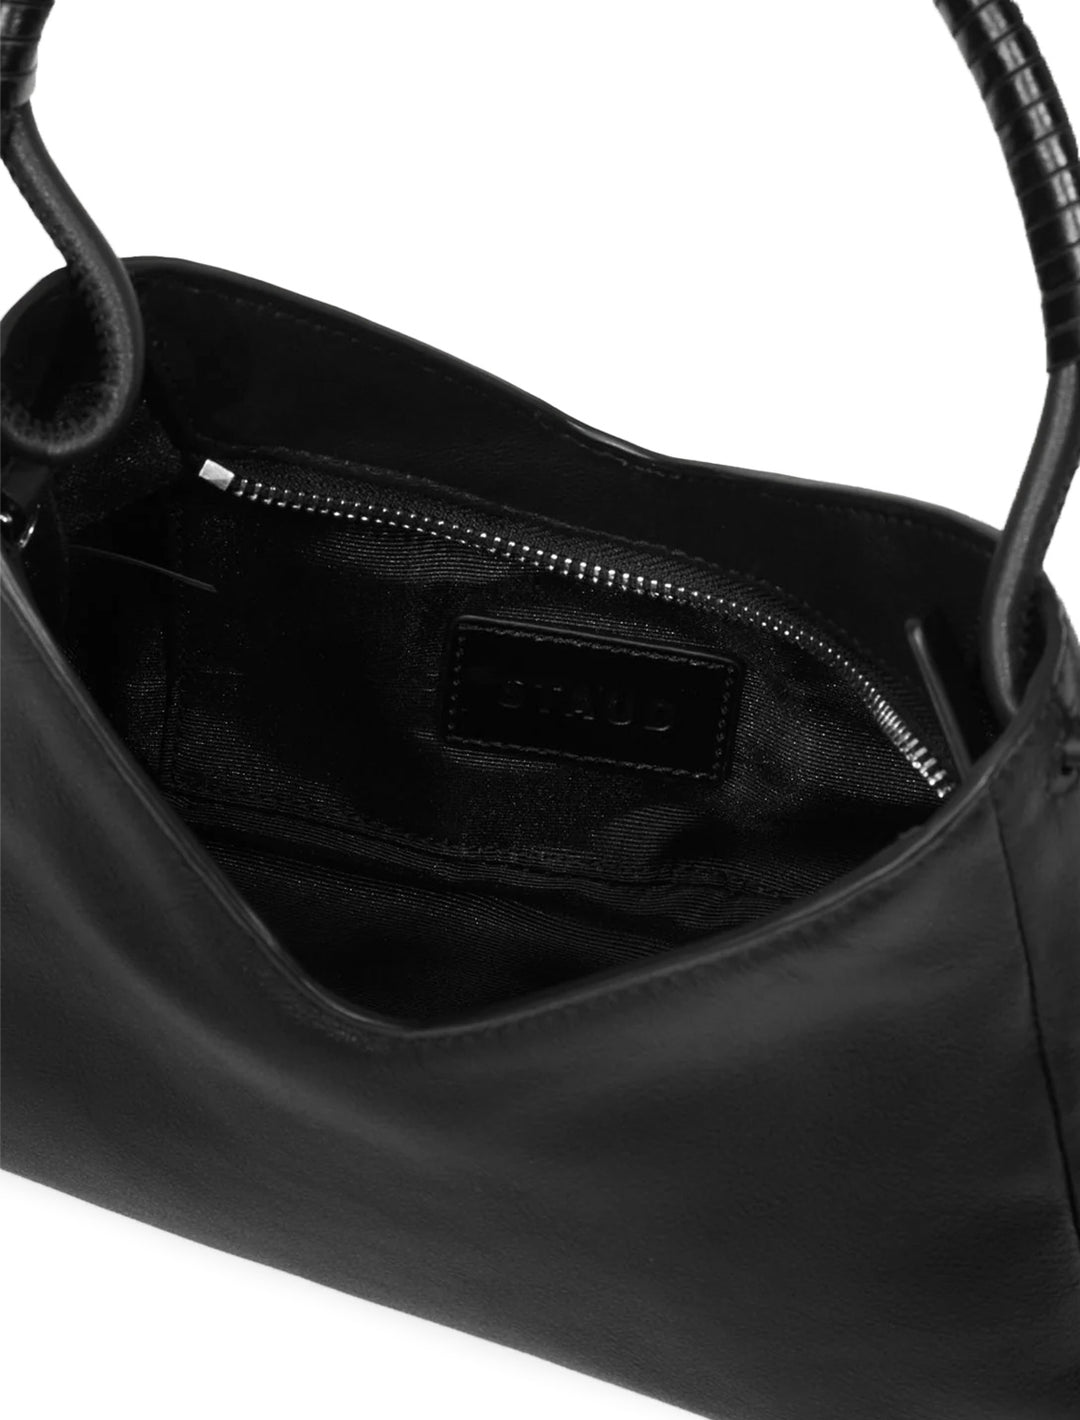 Close-up view of STAUD's valerie shoulder bag in black.